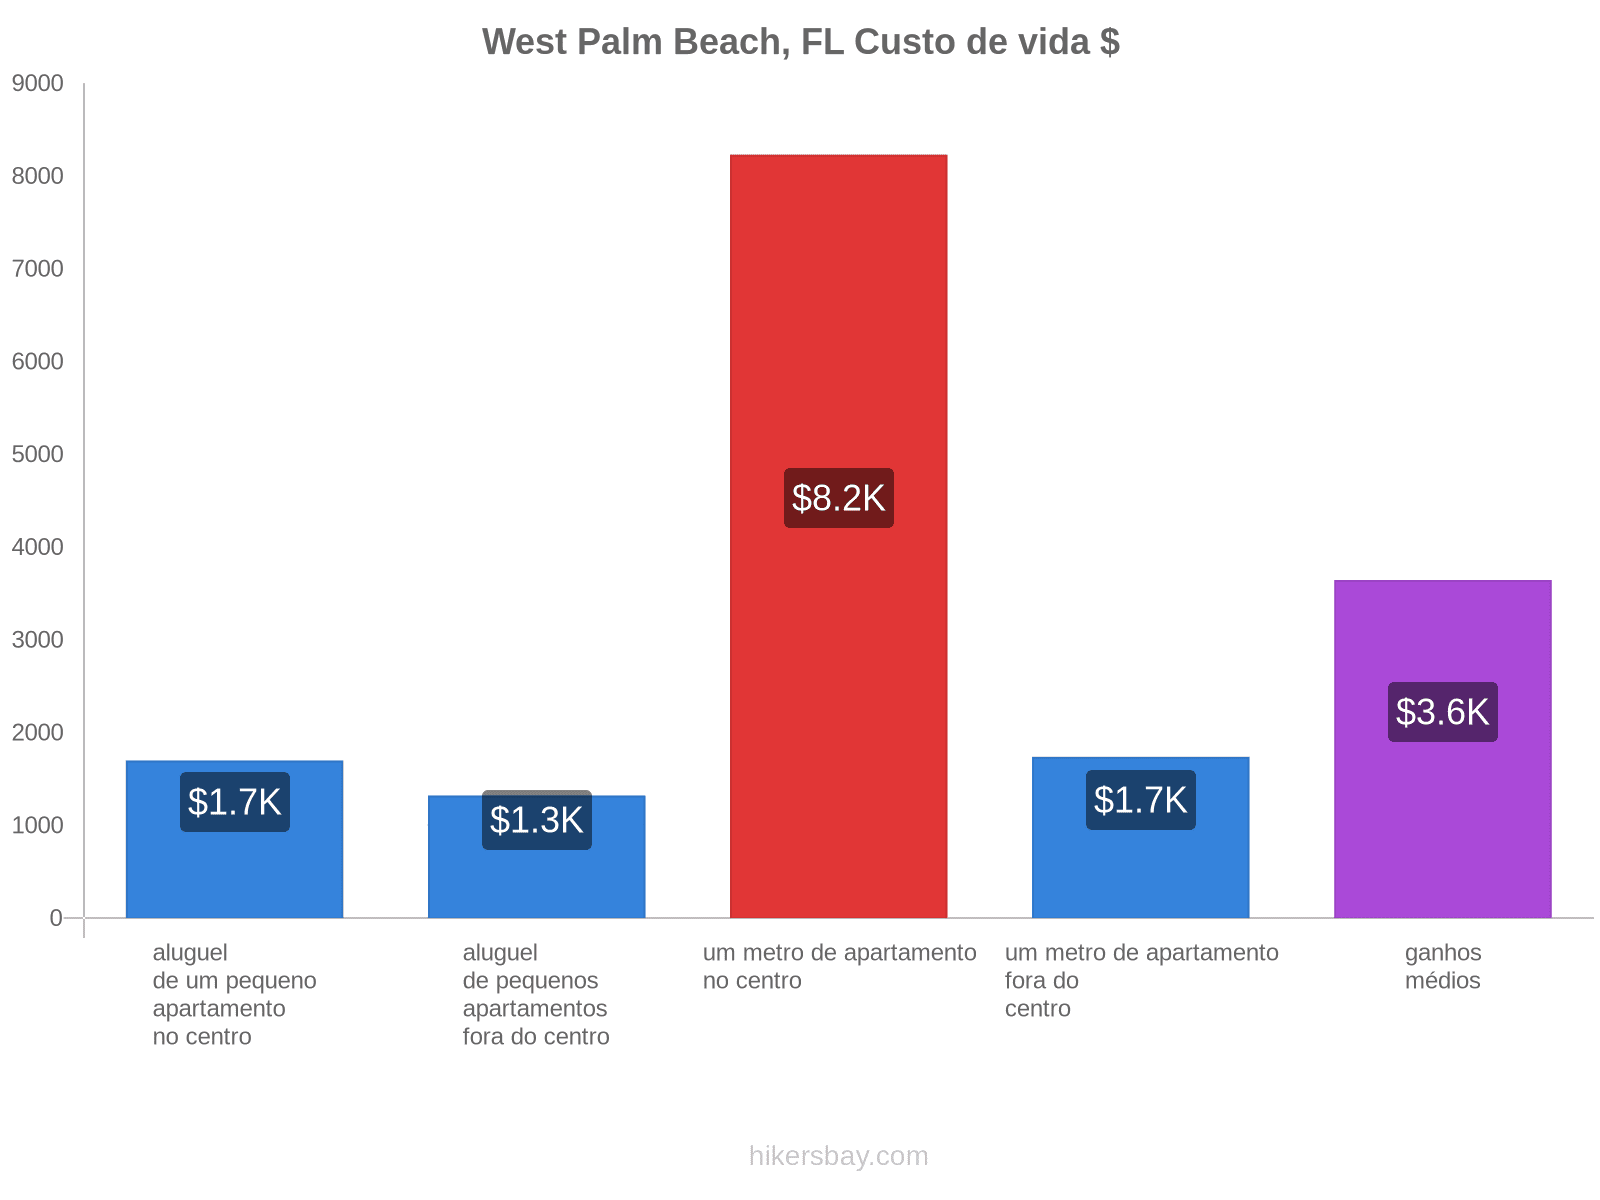 West Palm Beach, FL custo de vida hikersbay.com